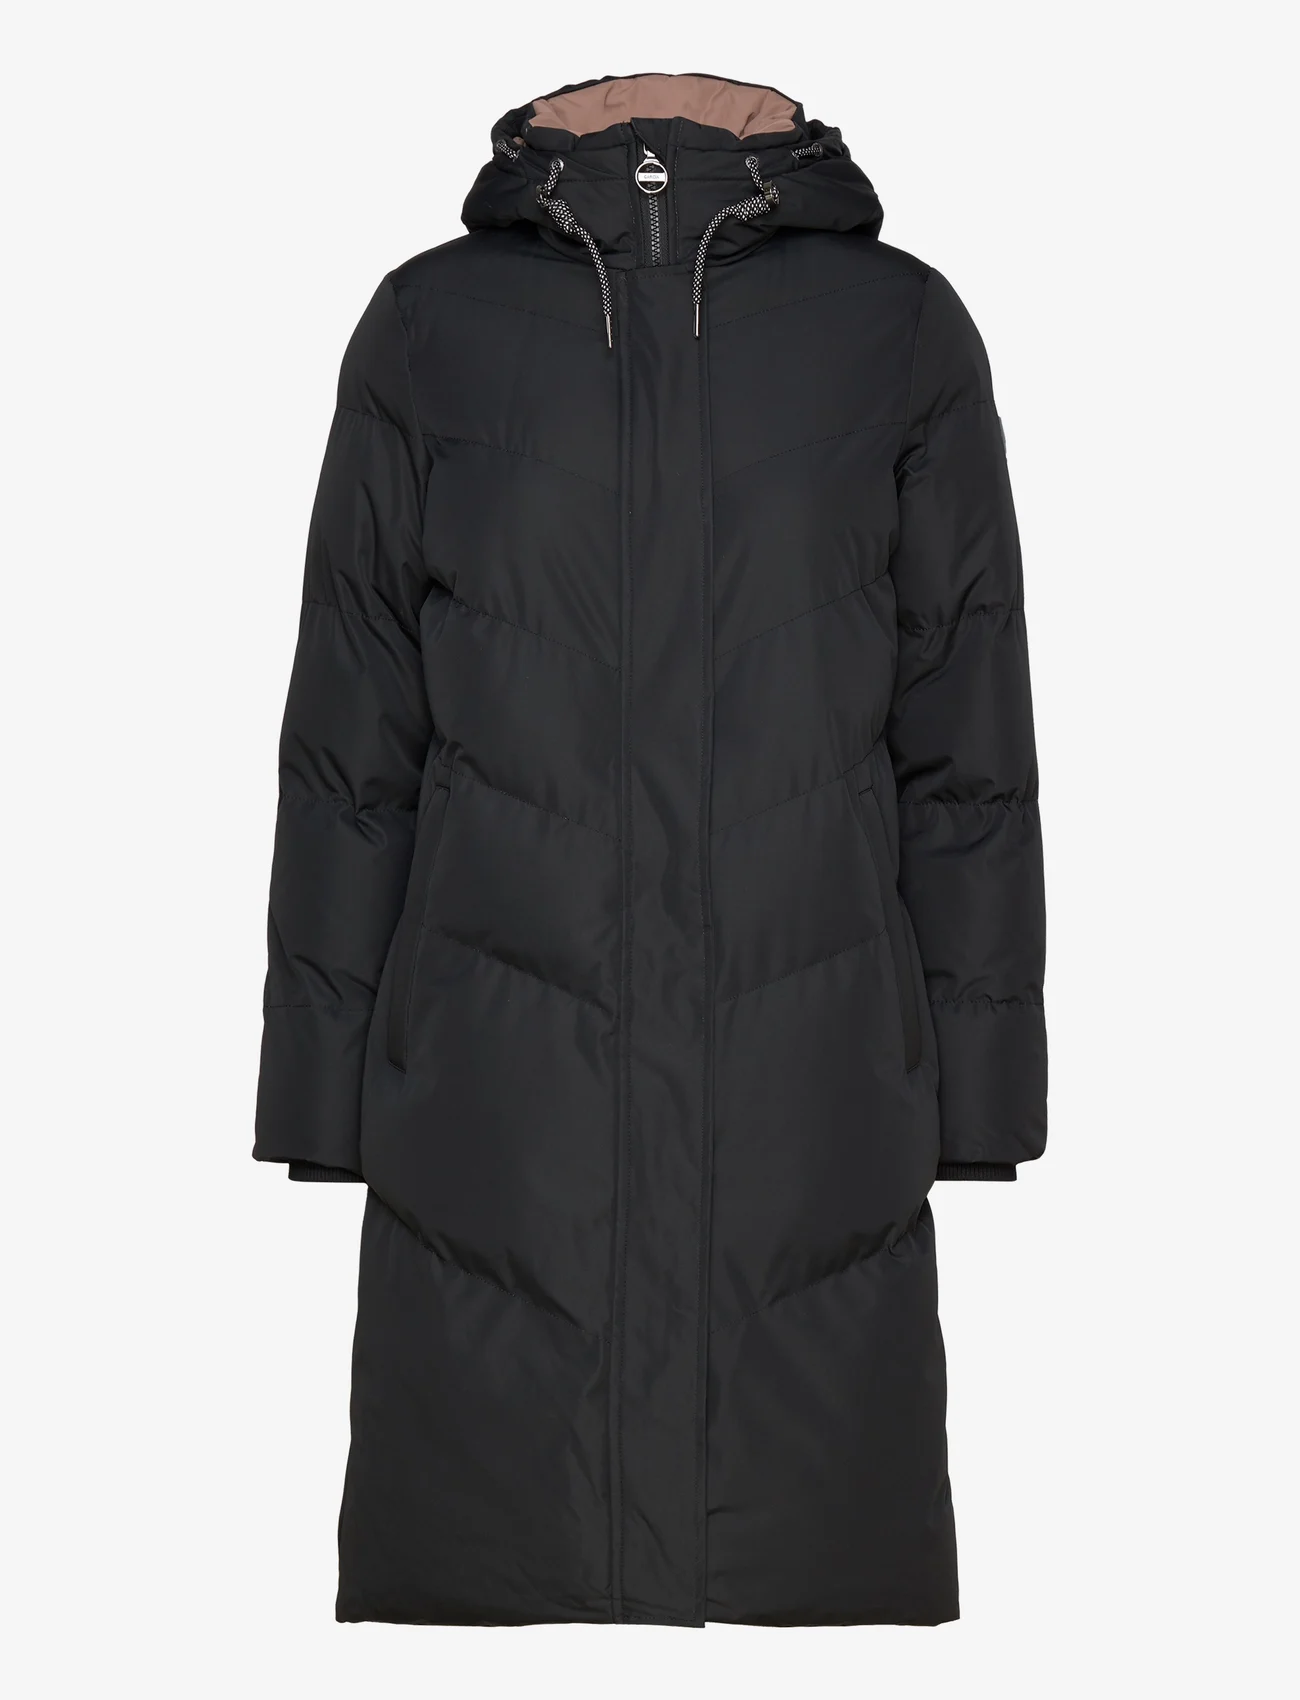 Garcia - ladies outdoor jackets - winterjassen - black - 0